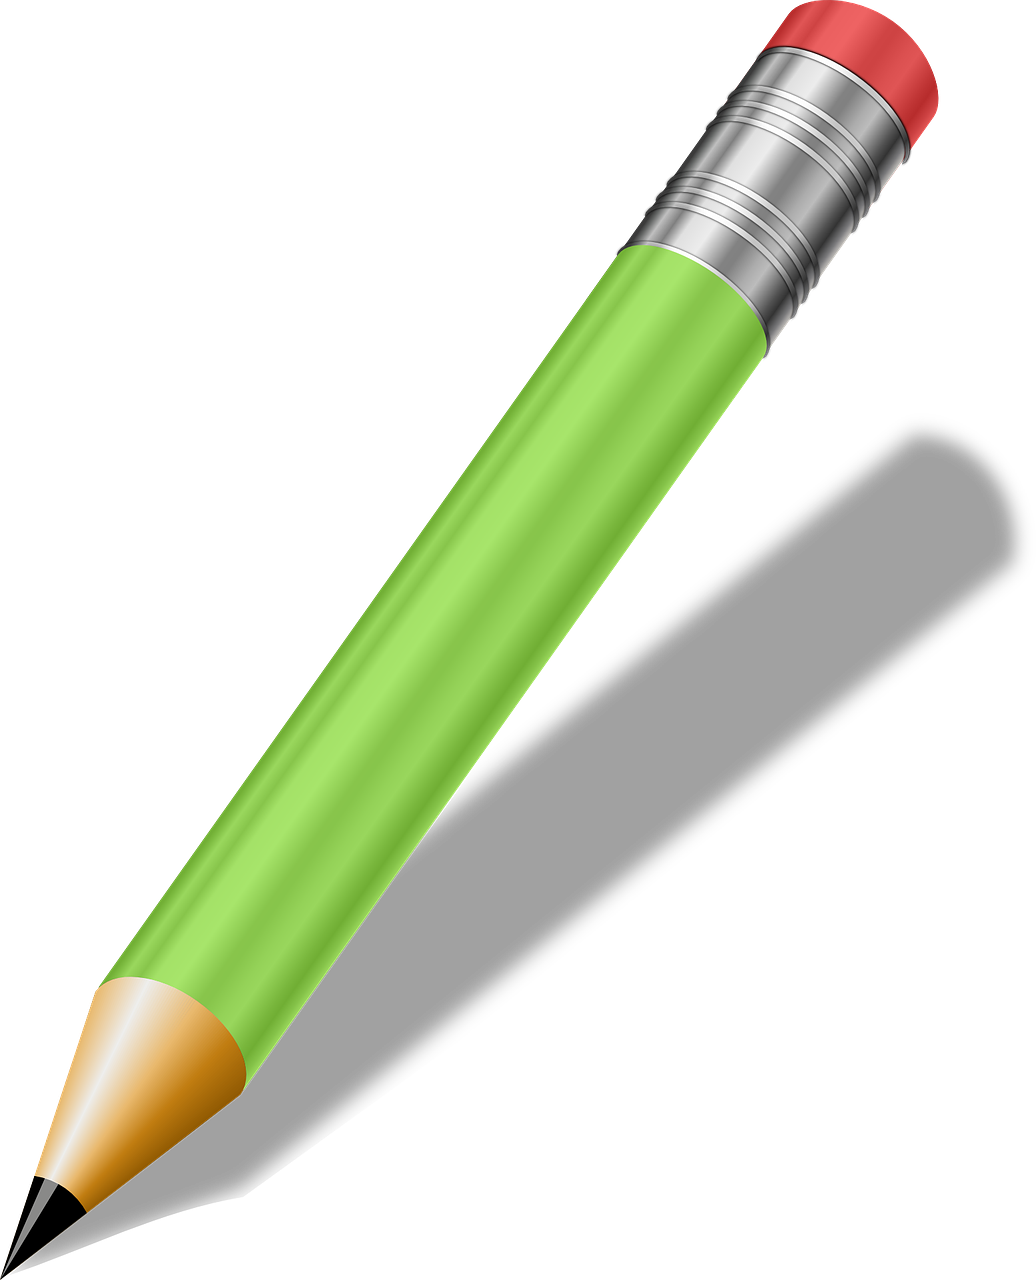 pencil green writing tools free photo